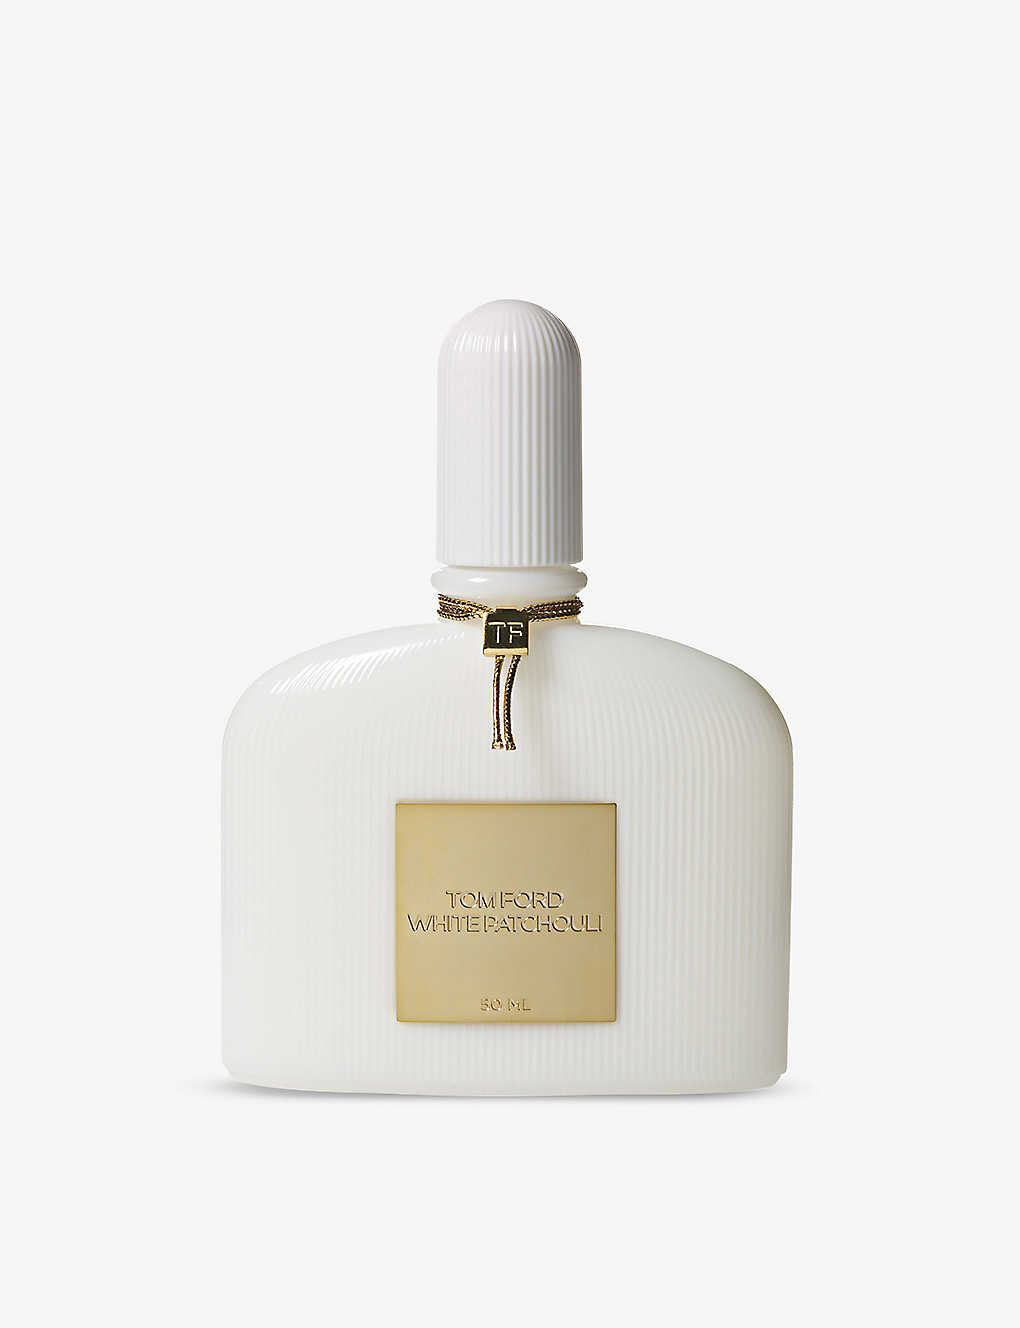 FORD - White eau parfum | Selfridges.com